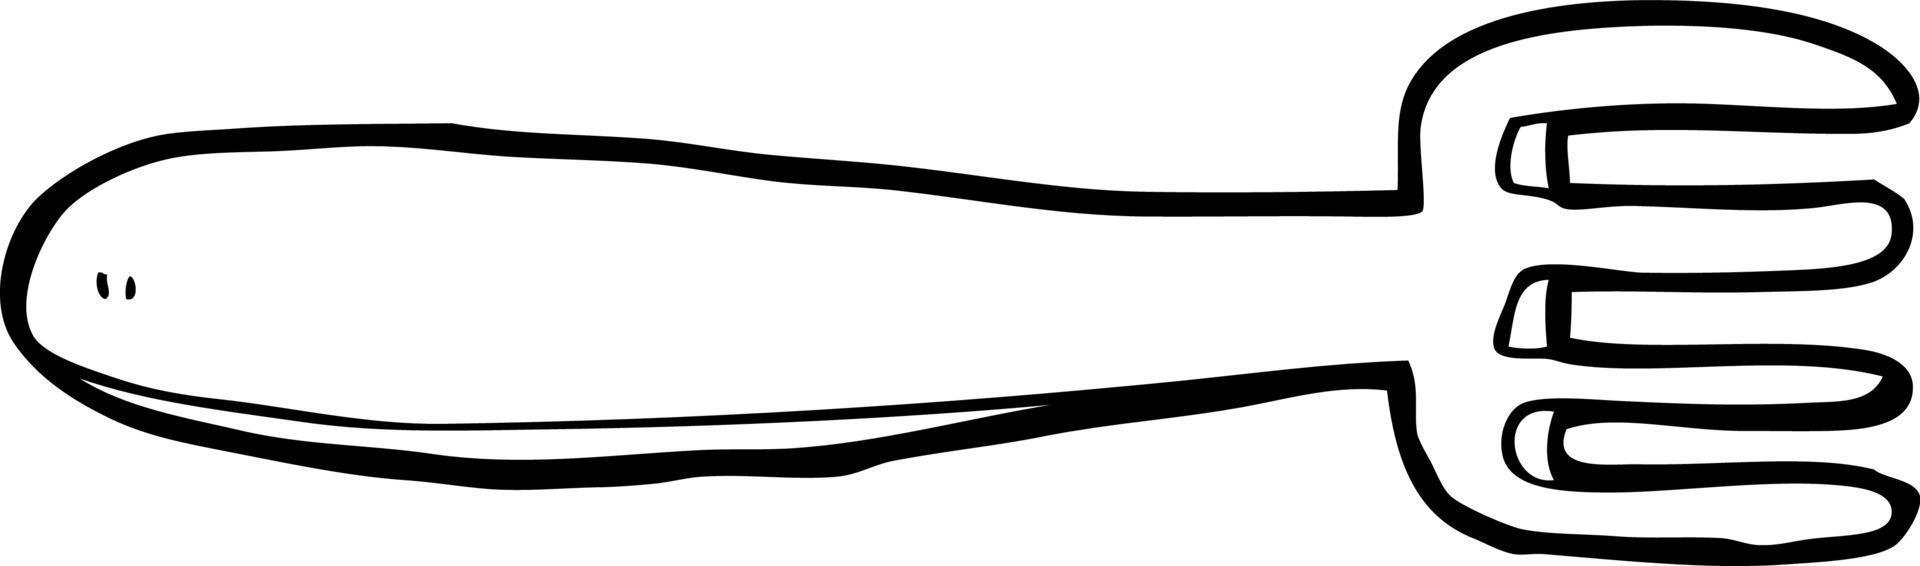 line drawing cartoon fork vector